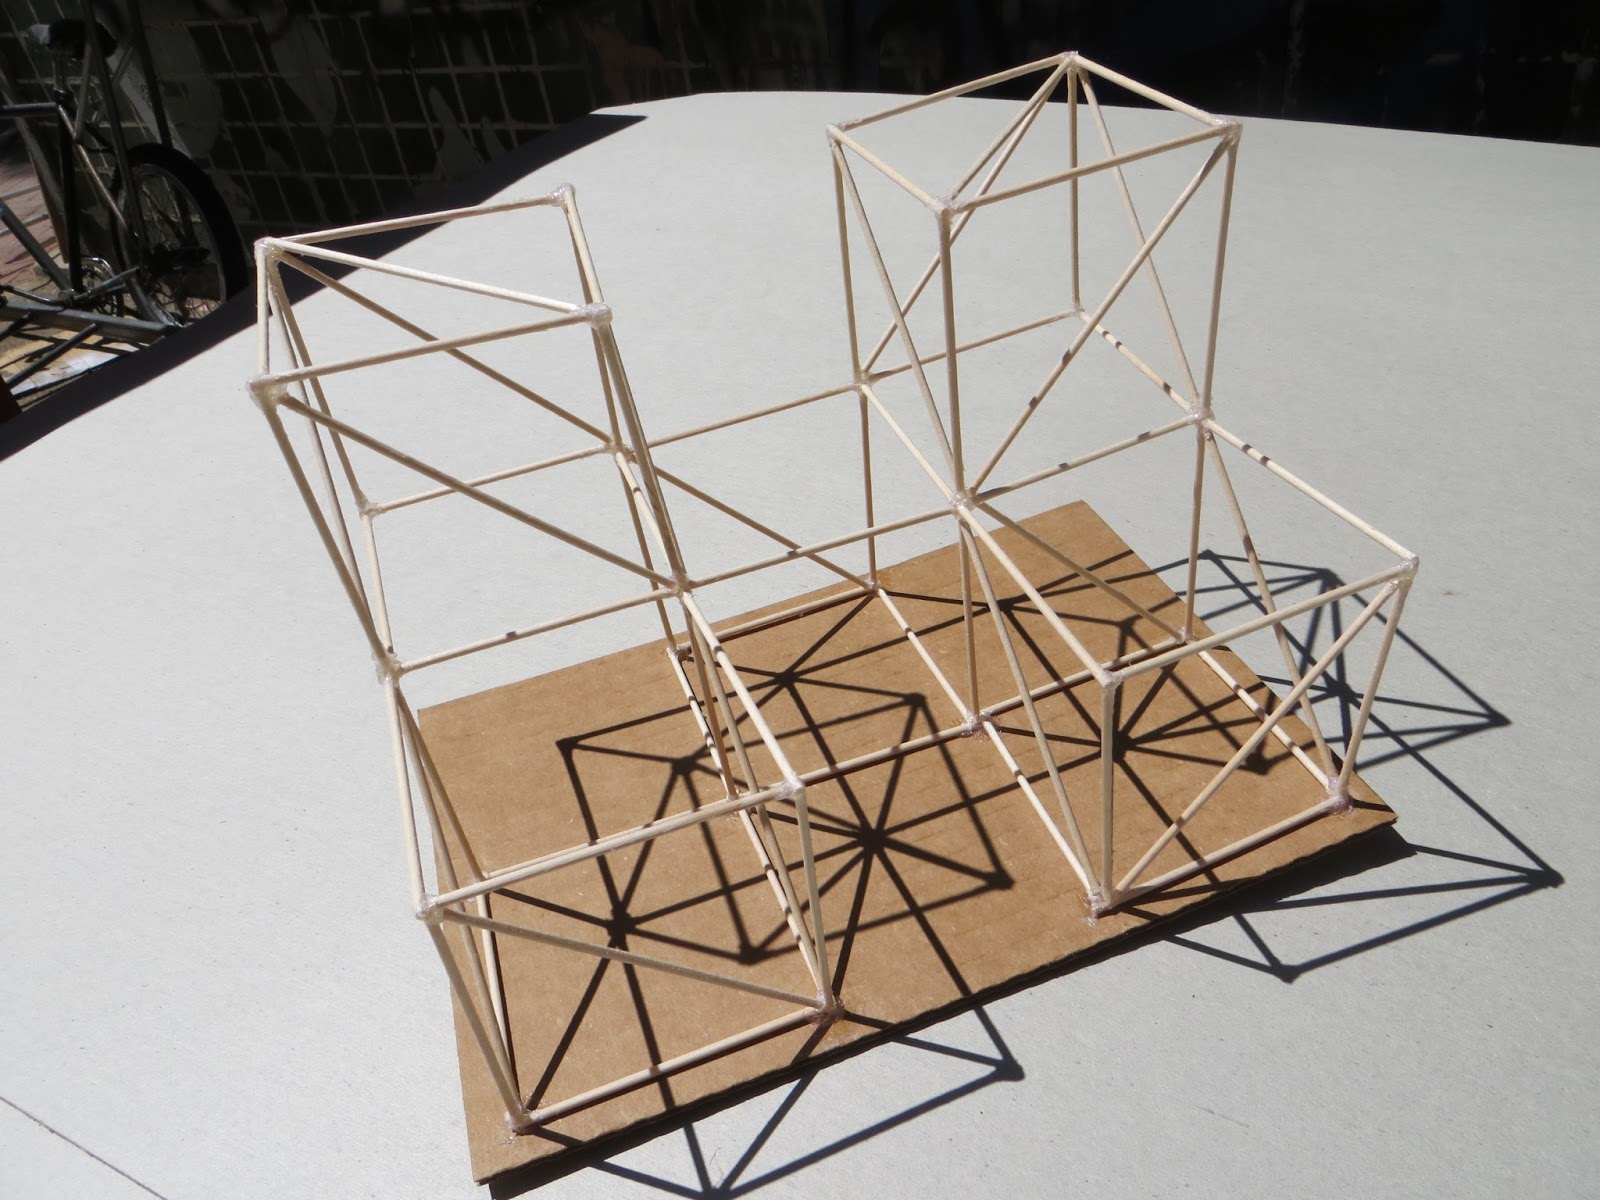 Architectural Design 5: Cube Manipulation